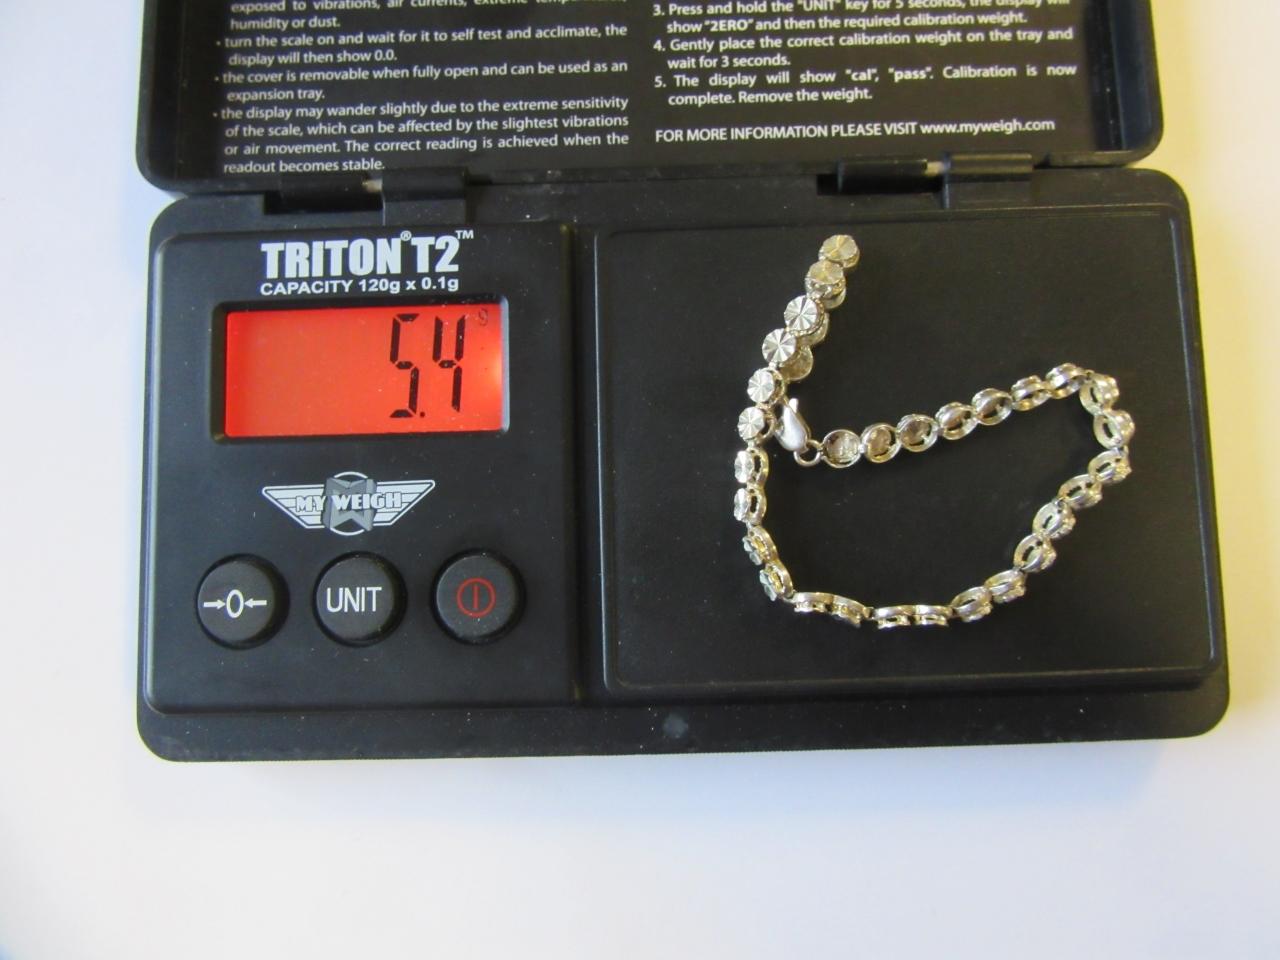 .925 Silver 5.4g7.25" Clear Stone Bracelet